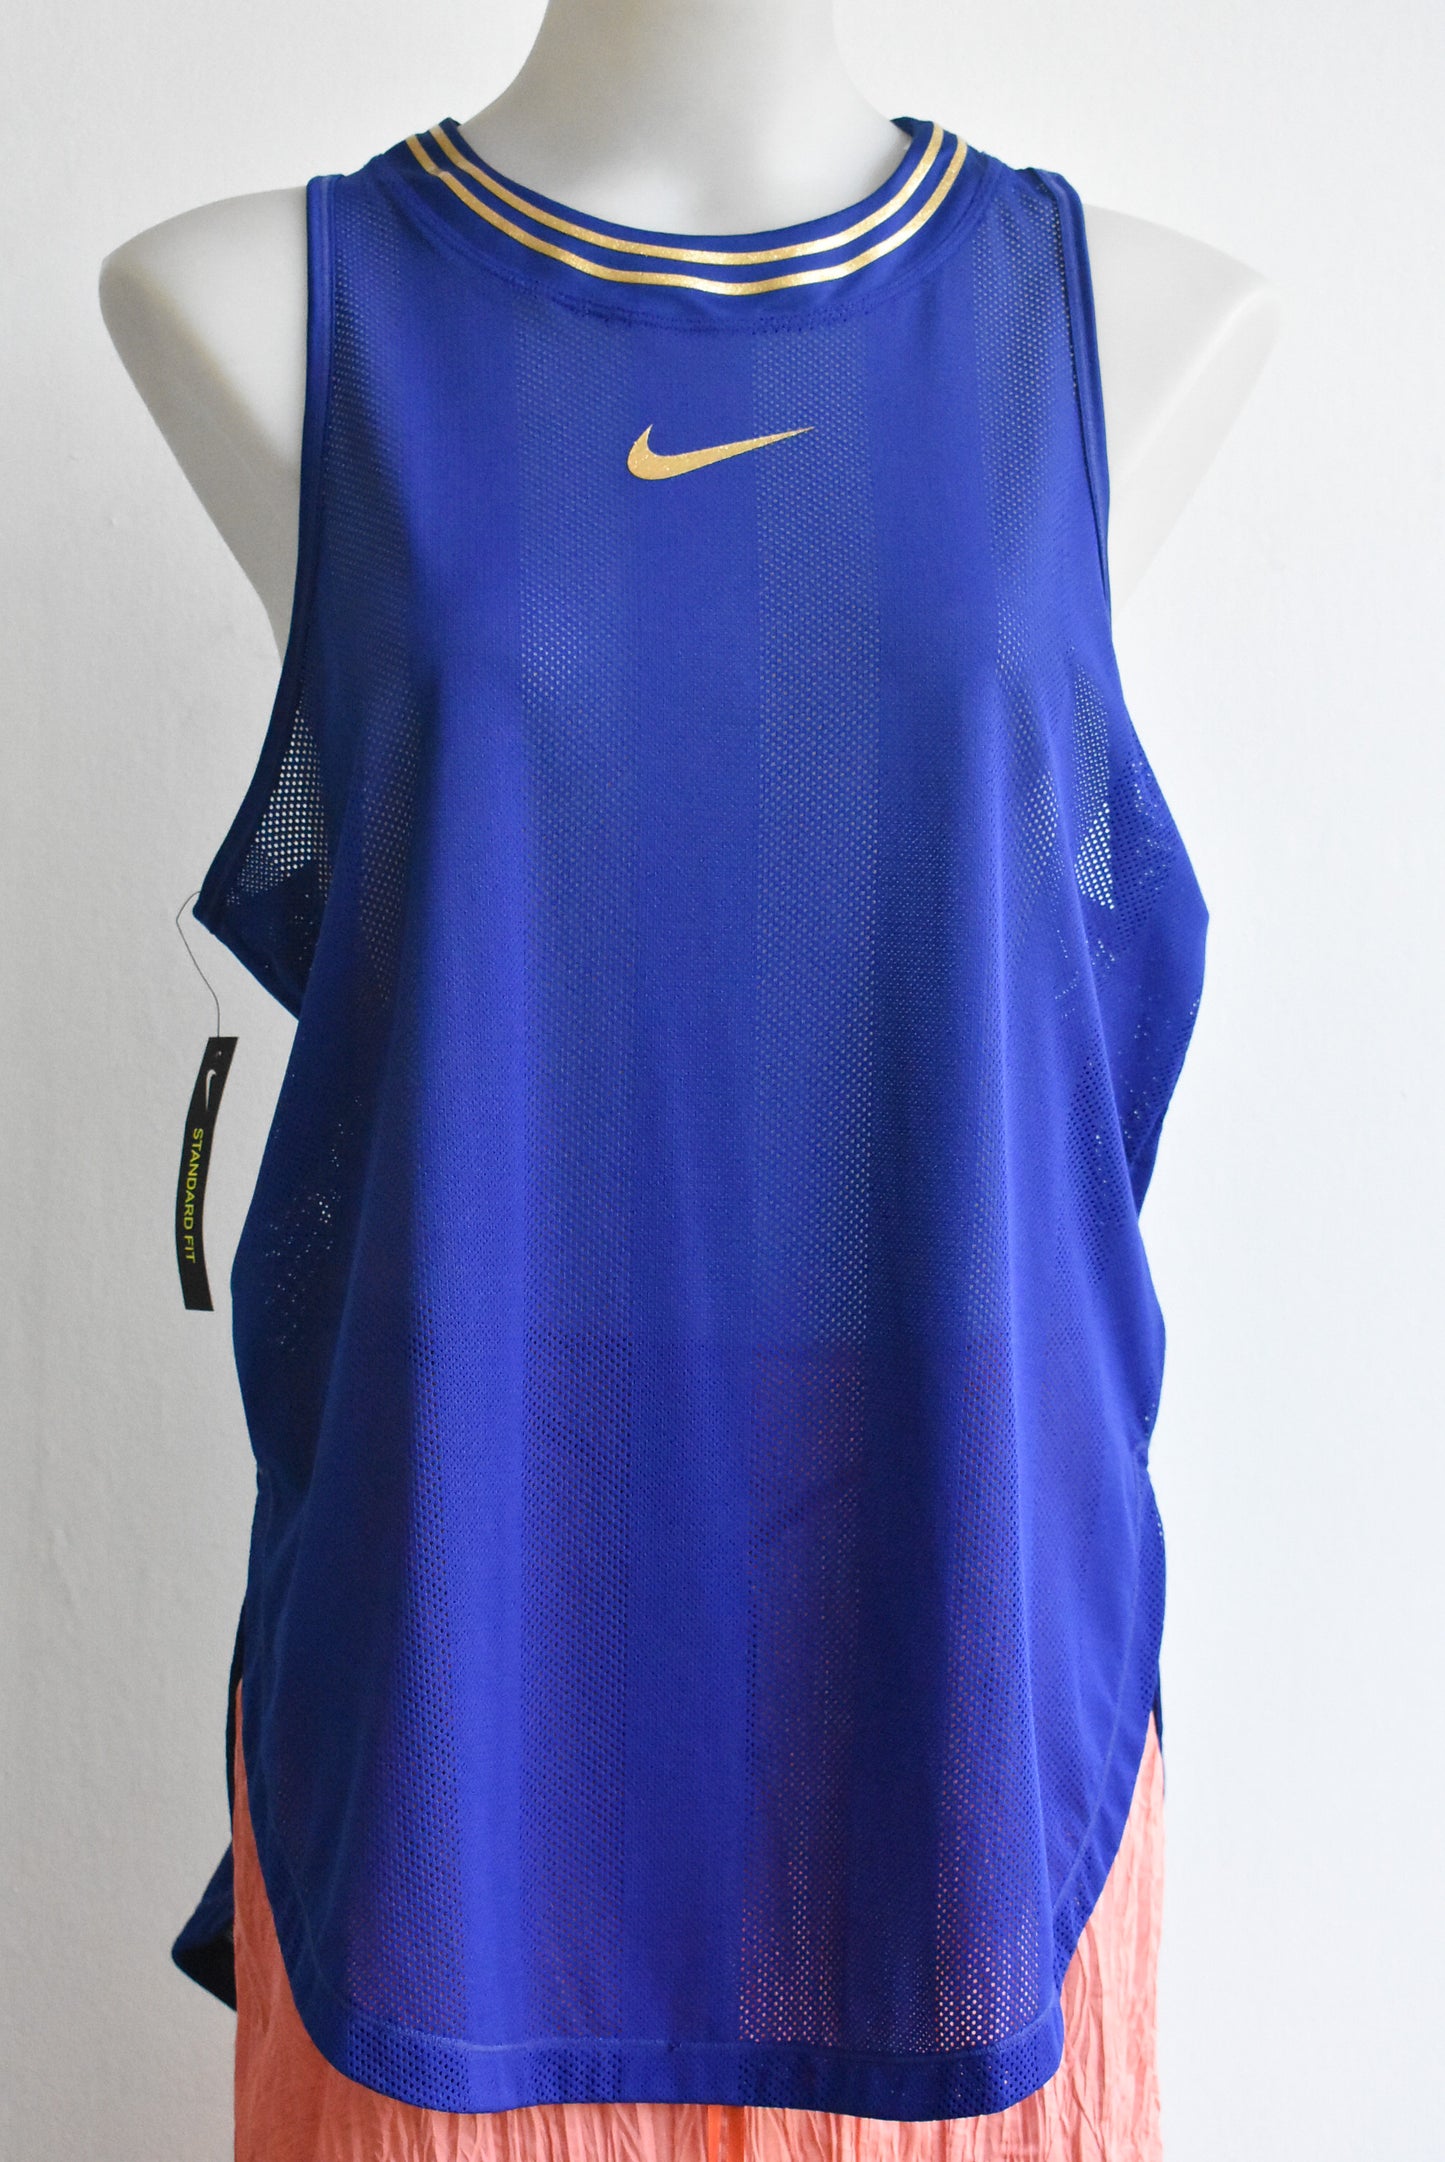 Nike running singlet, NWT, size L